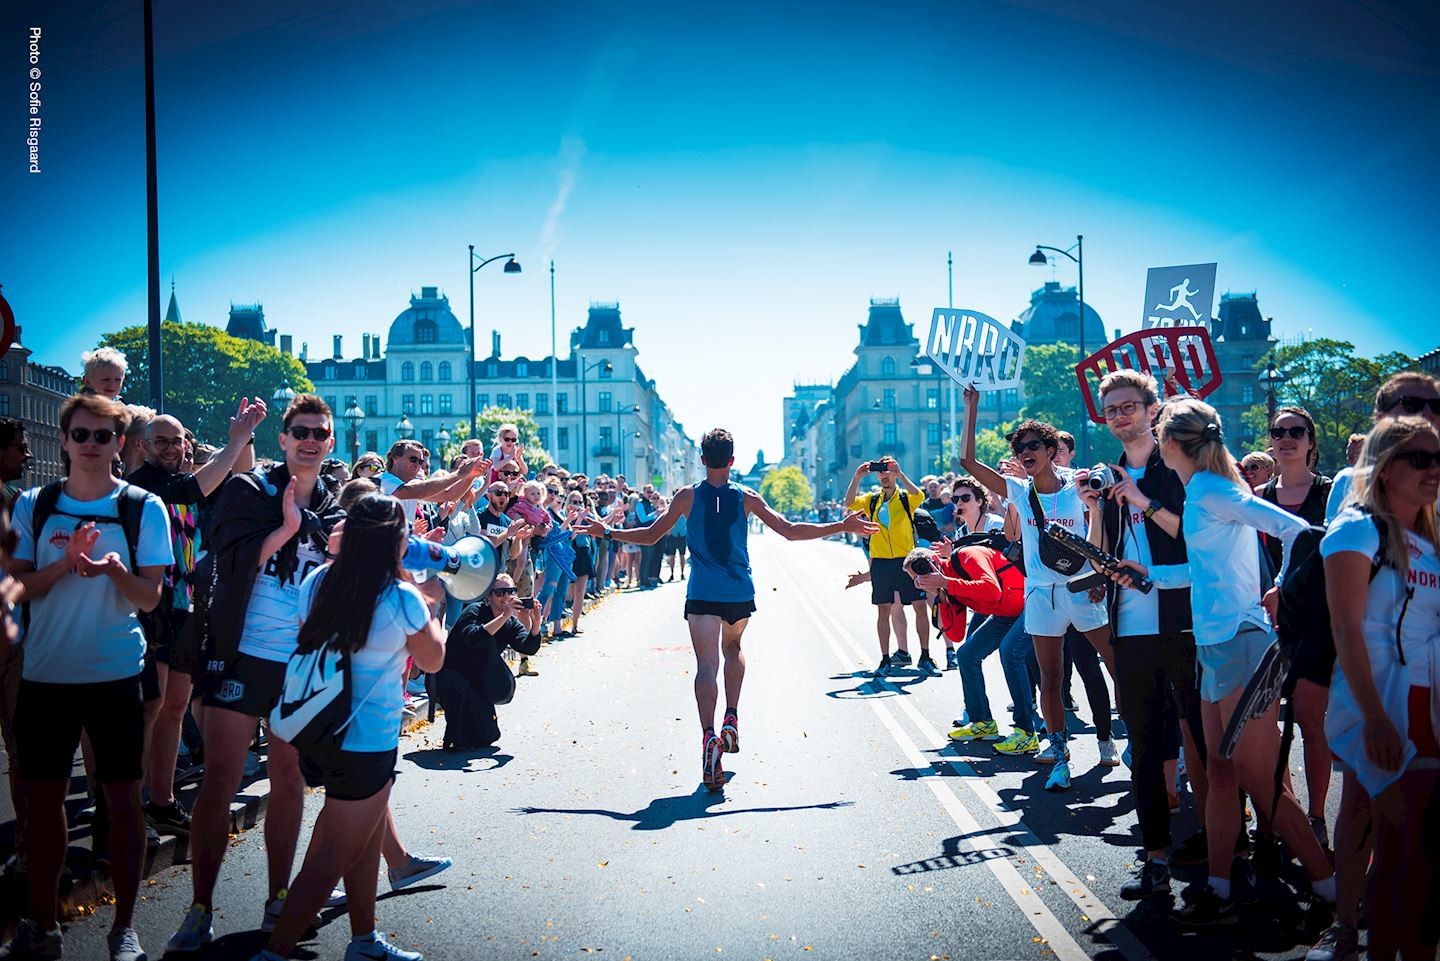 Copenhagen Marathon 2020 has been cancelled due to Covid-19